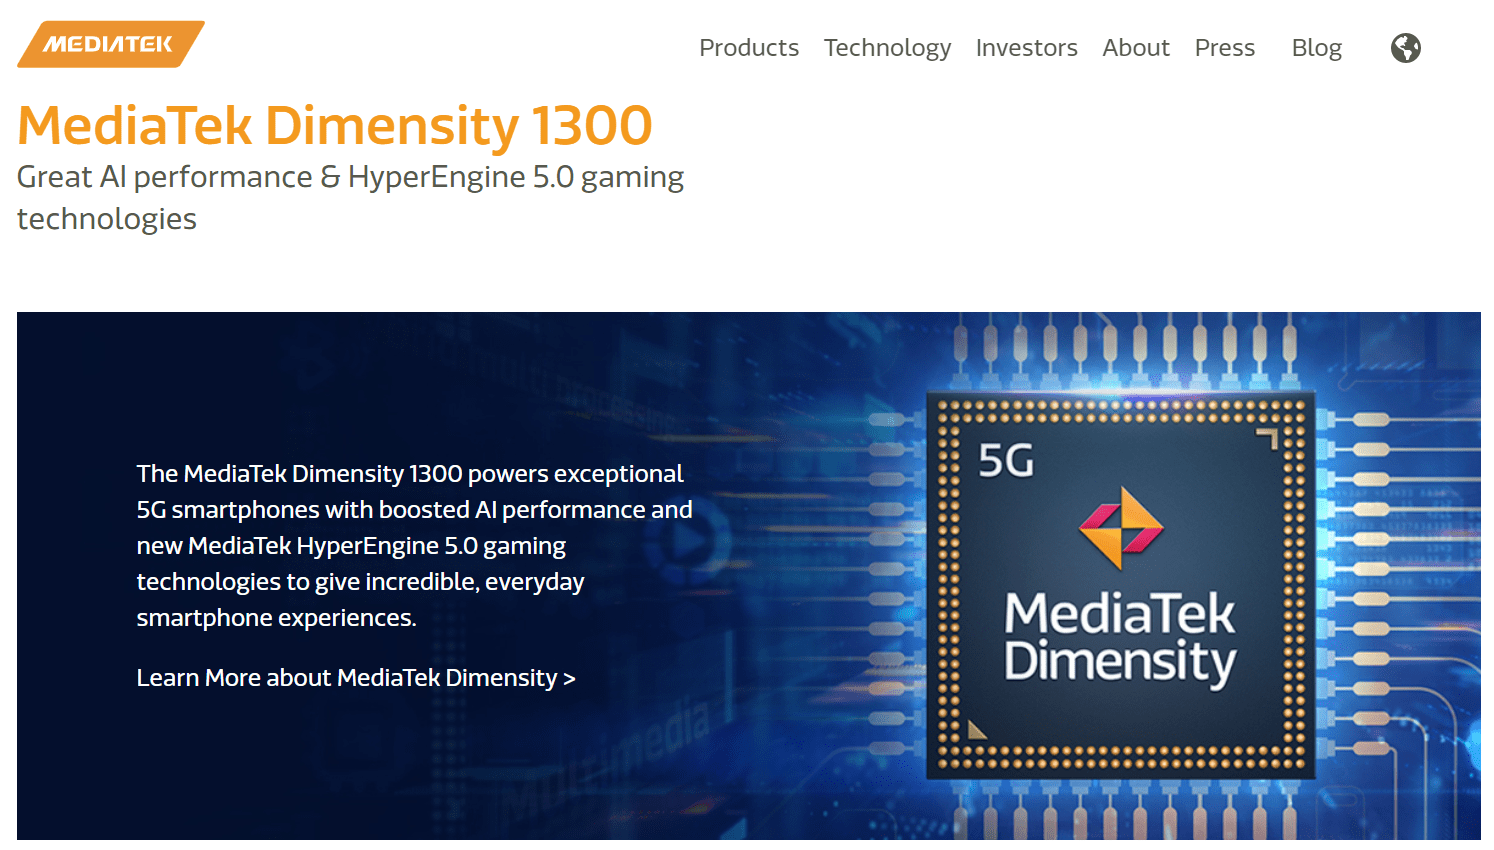 MediaTekがDimensity 1300を静かに発表、AI性能の向上とHyperEngine 5.0を採用